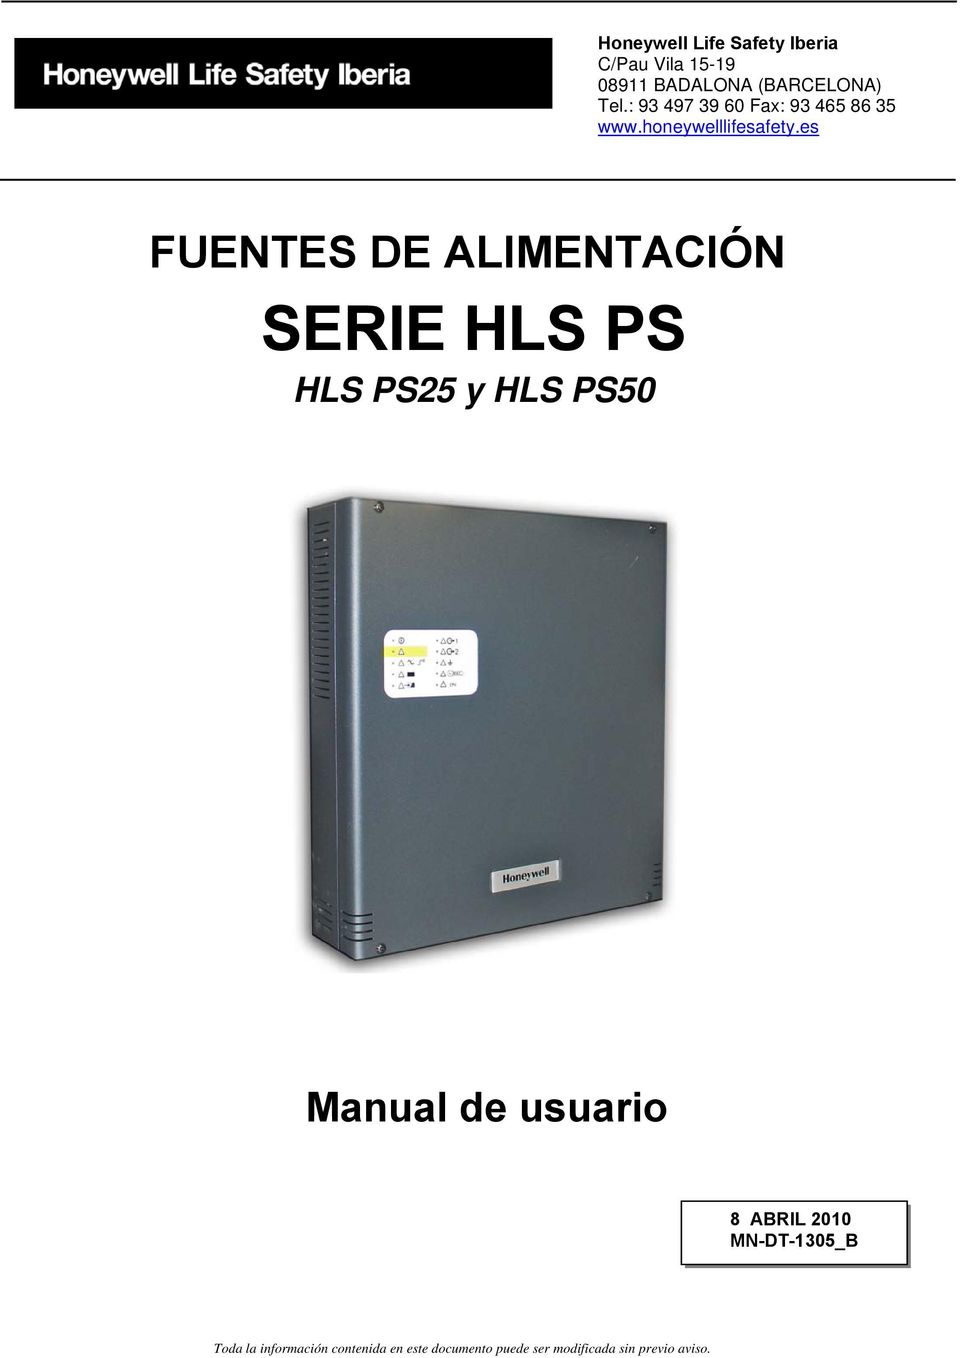 es FUENTES DE ALIMENTACIÓN SERIE HLS PS HLS PS25 y HLS PS50 Manual de usuario 8